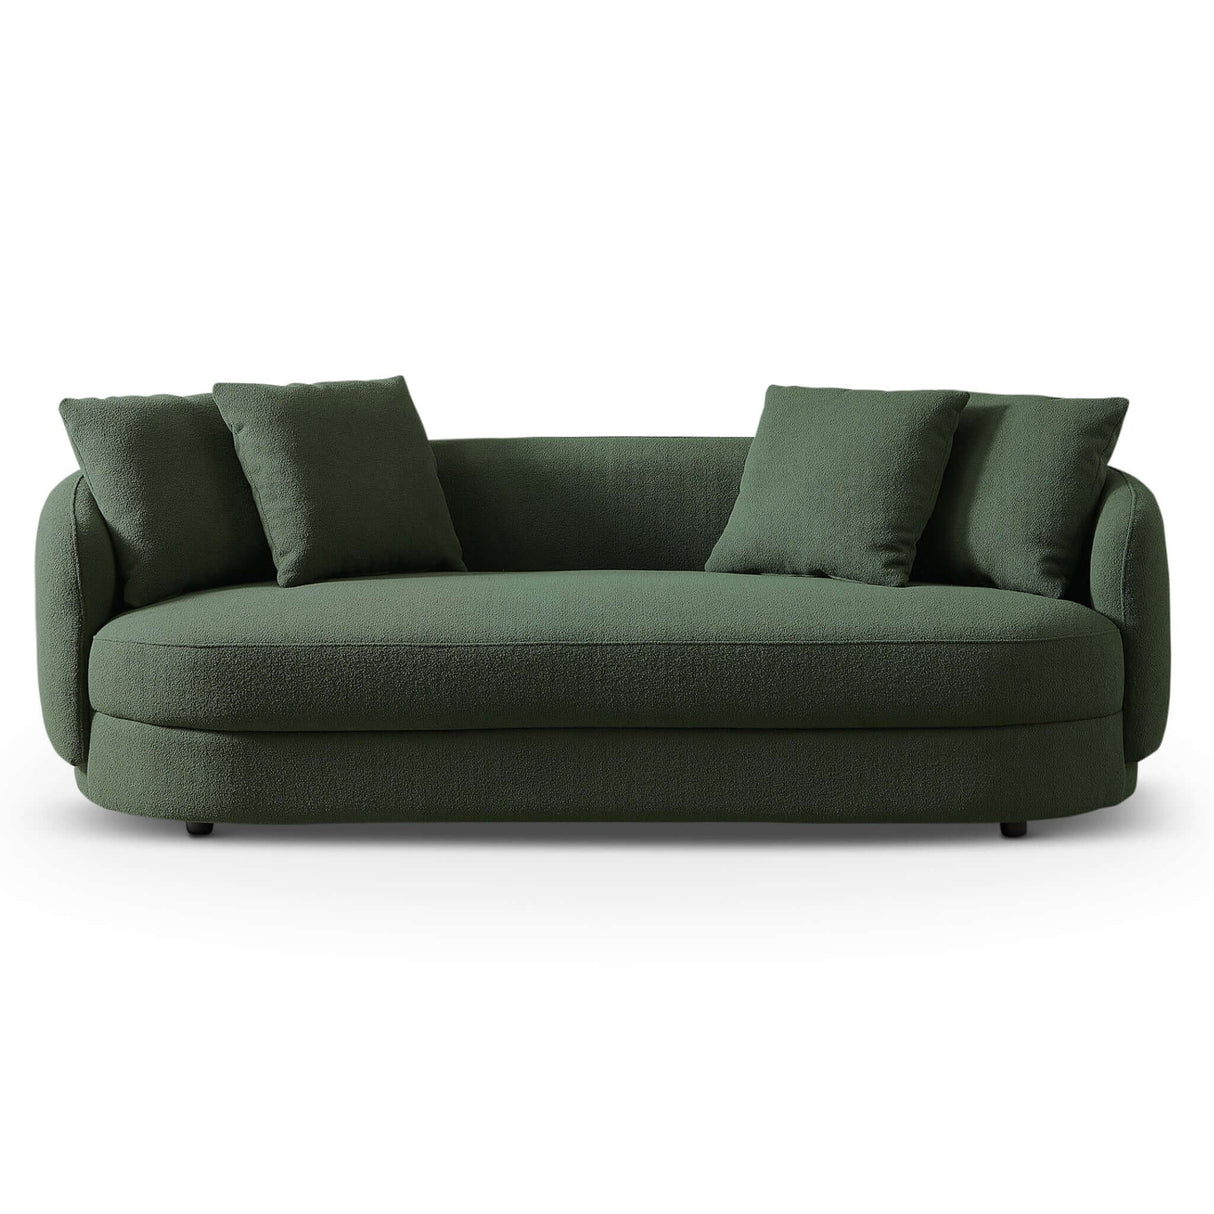 Curved boucle sofa